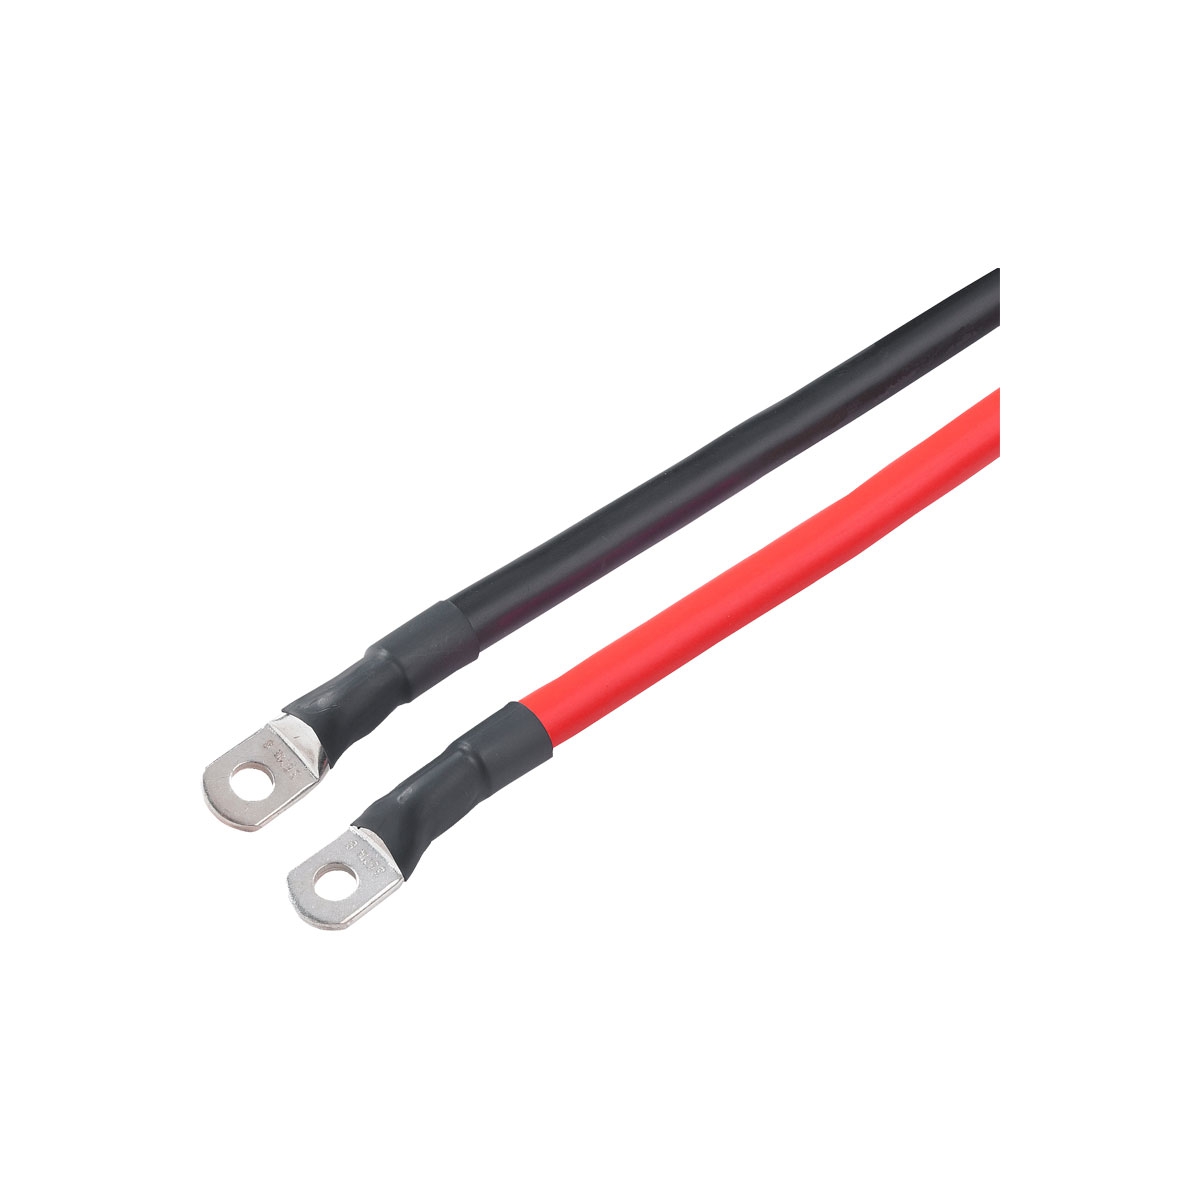 VOTRONIC Hochstrom-Kabelsatz rot-schwarz 35mm 2m - 2273